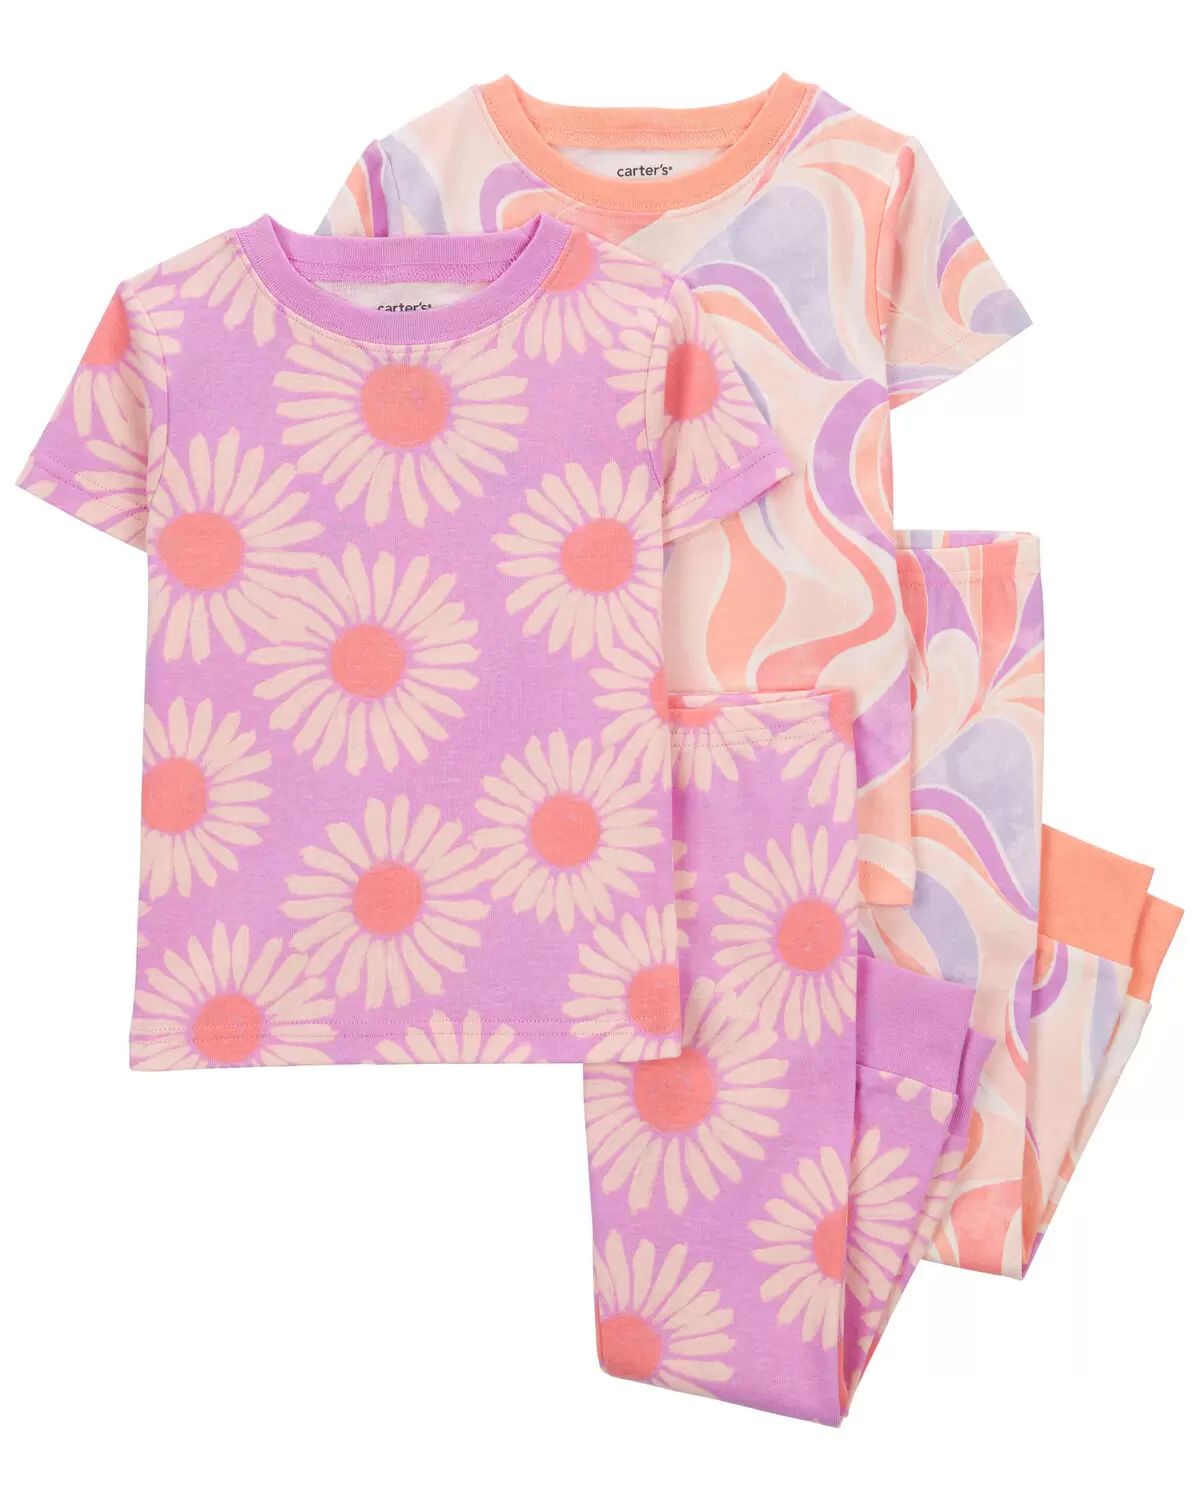 Toddler 4-Piece Daisy 100% Snug Fit Cotton Pajamas | Carter's